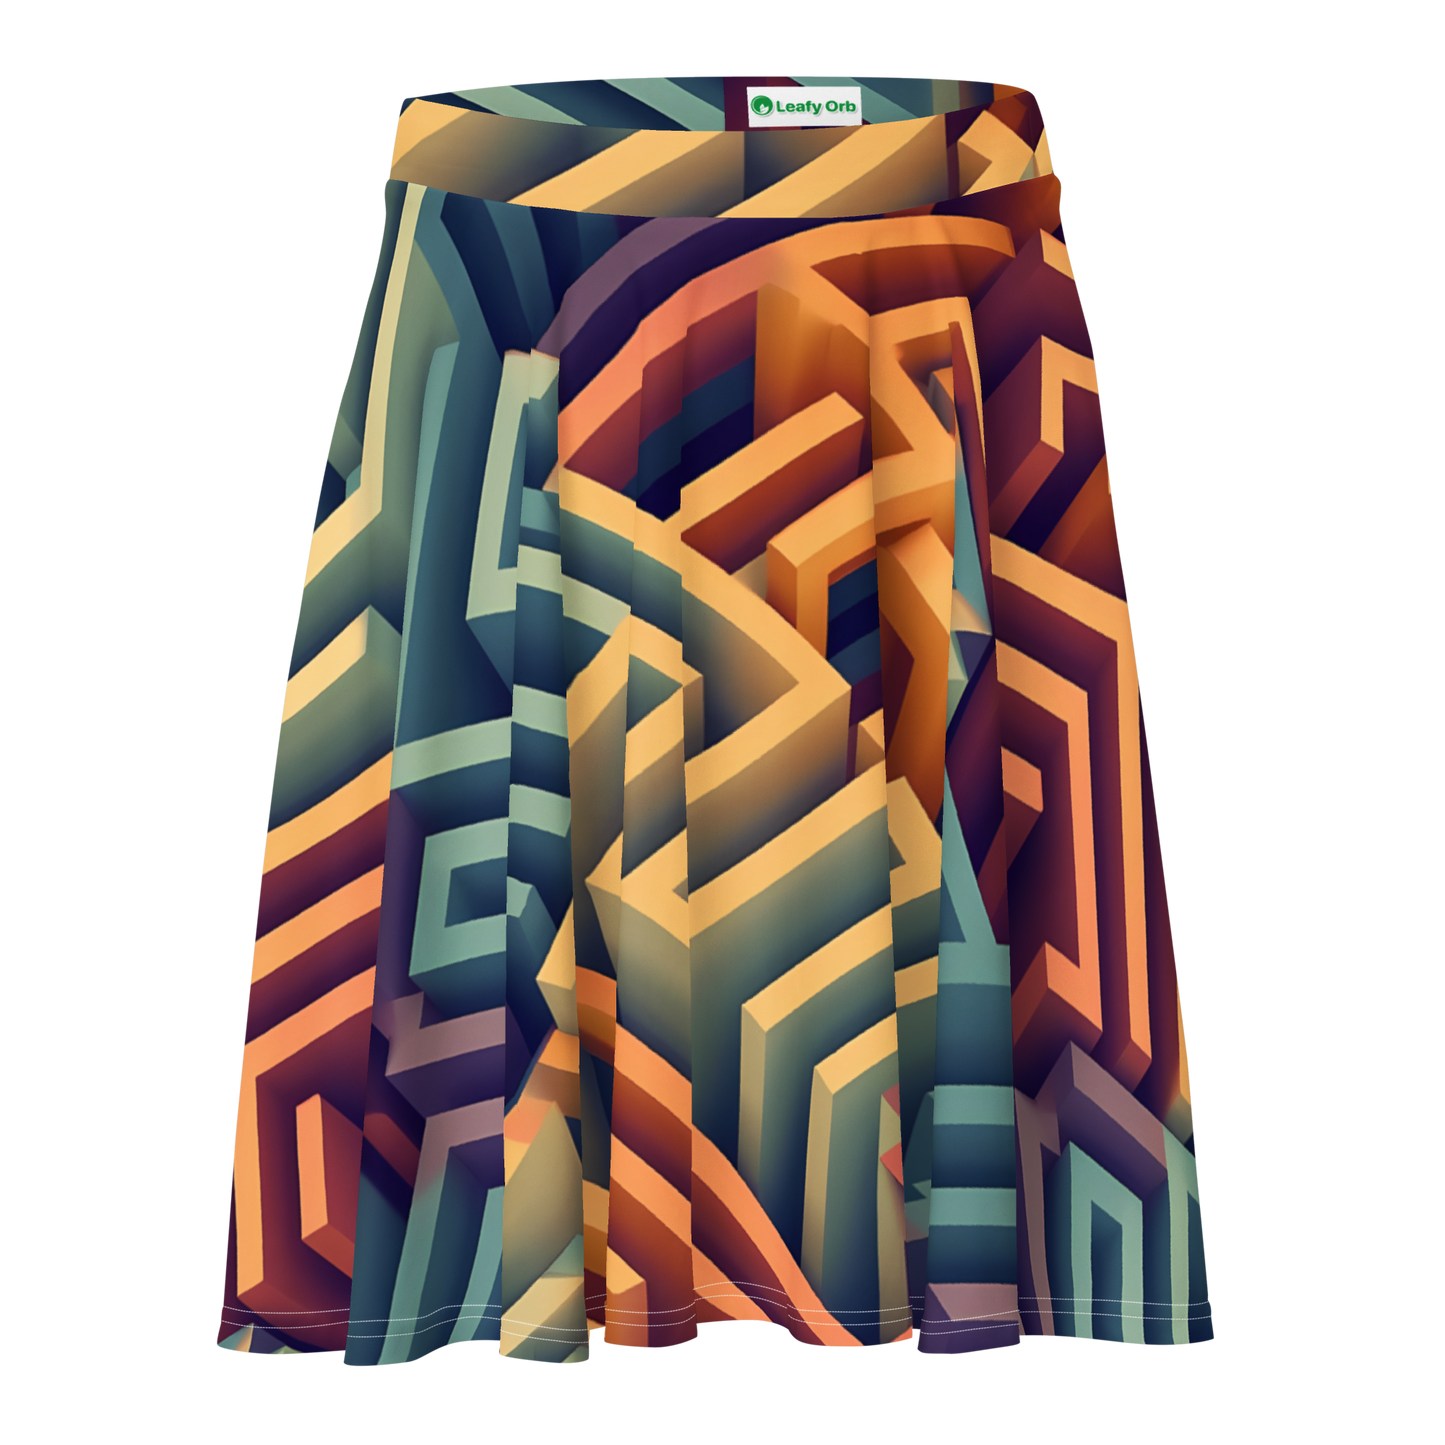 3D Maze Illusion | 3D Patterns | All-Over Print Skater Skirt - #3